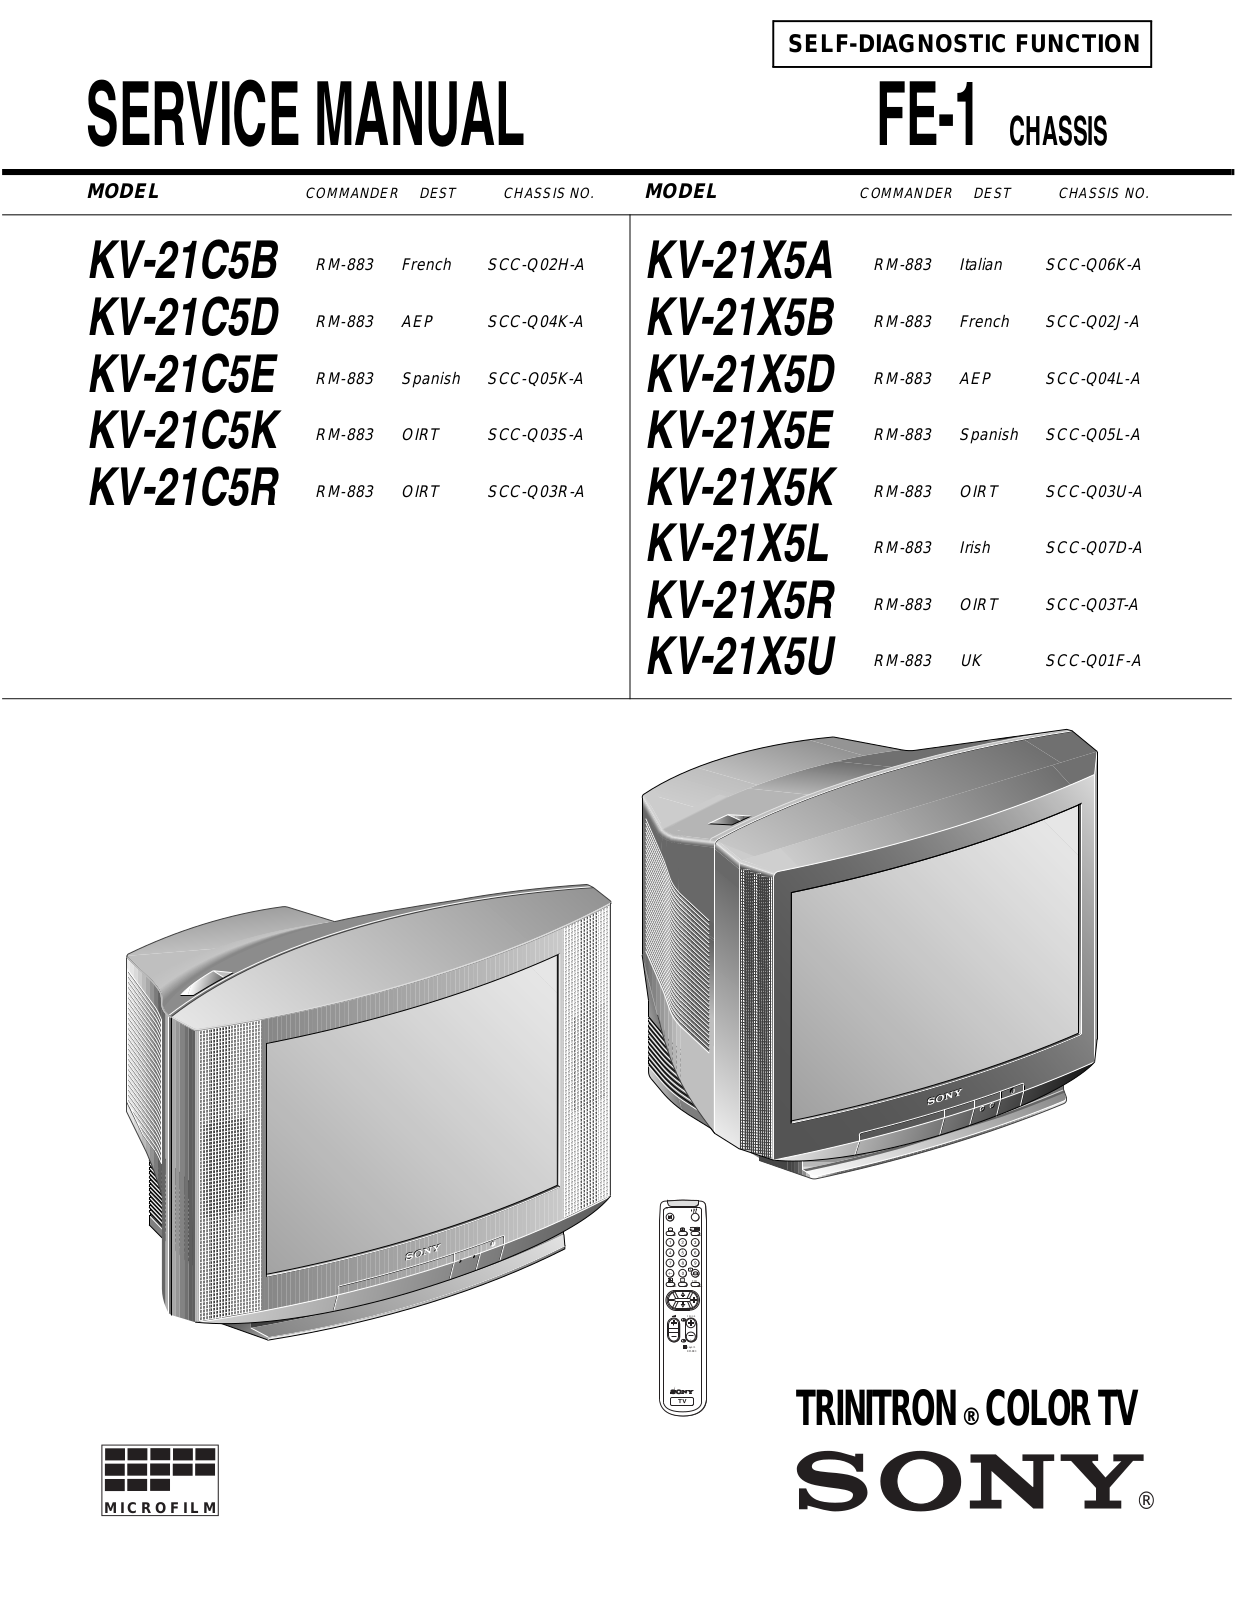 Sony KV-21X5U, KV-21X5R, KV-21X5L, KV-21X5K, KV-21X5E Service Manual